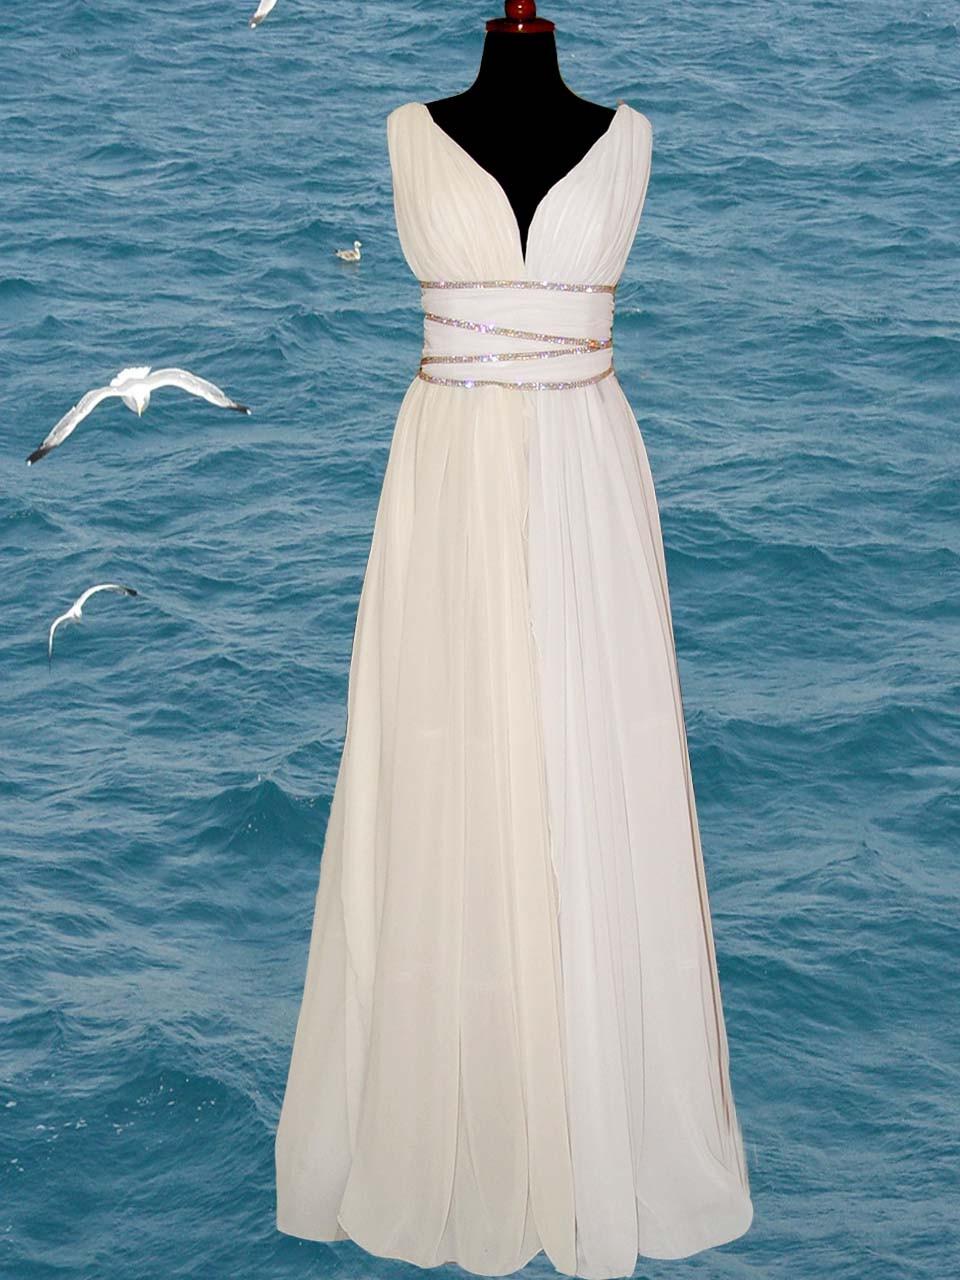 Greek style wedding dresses of